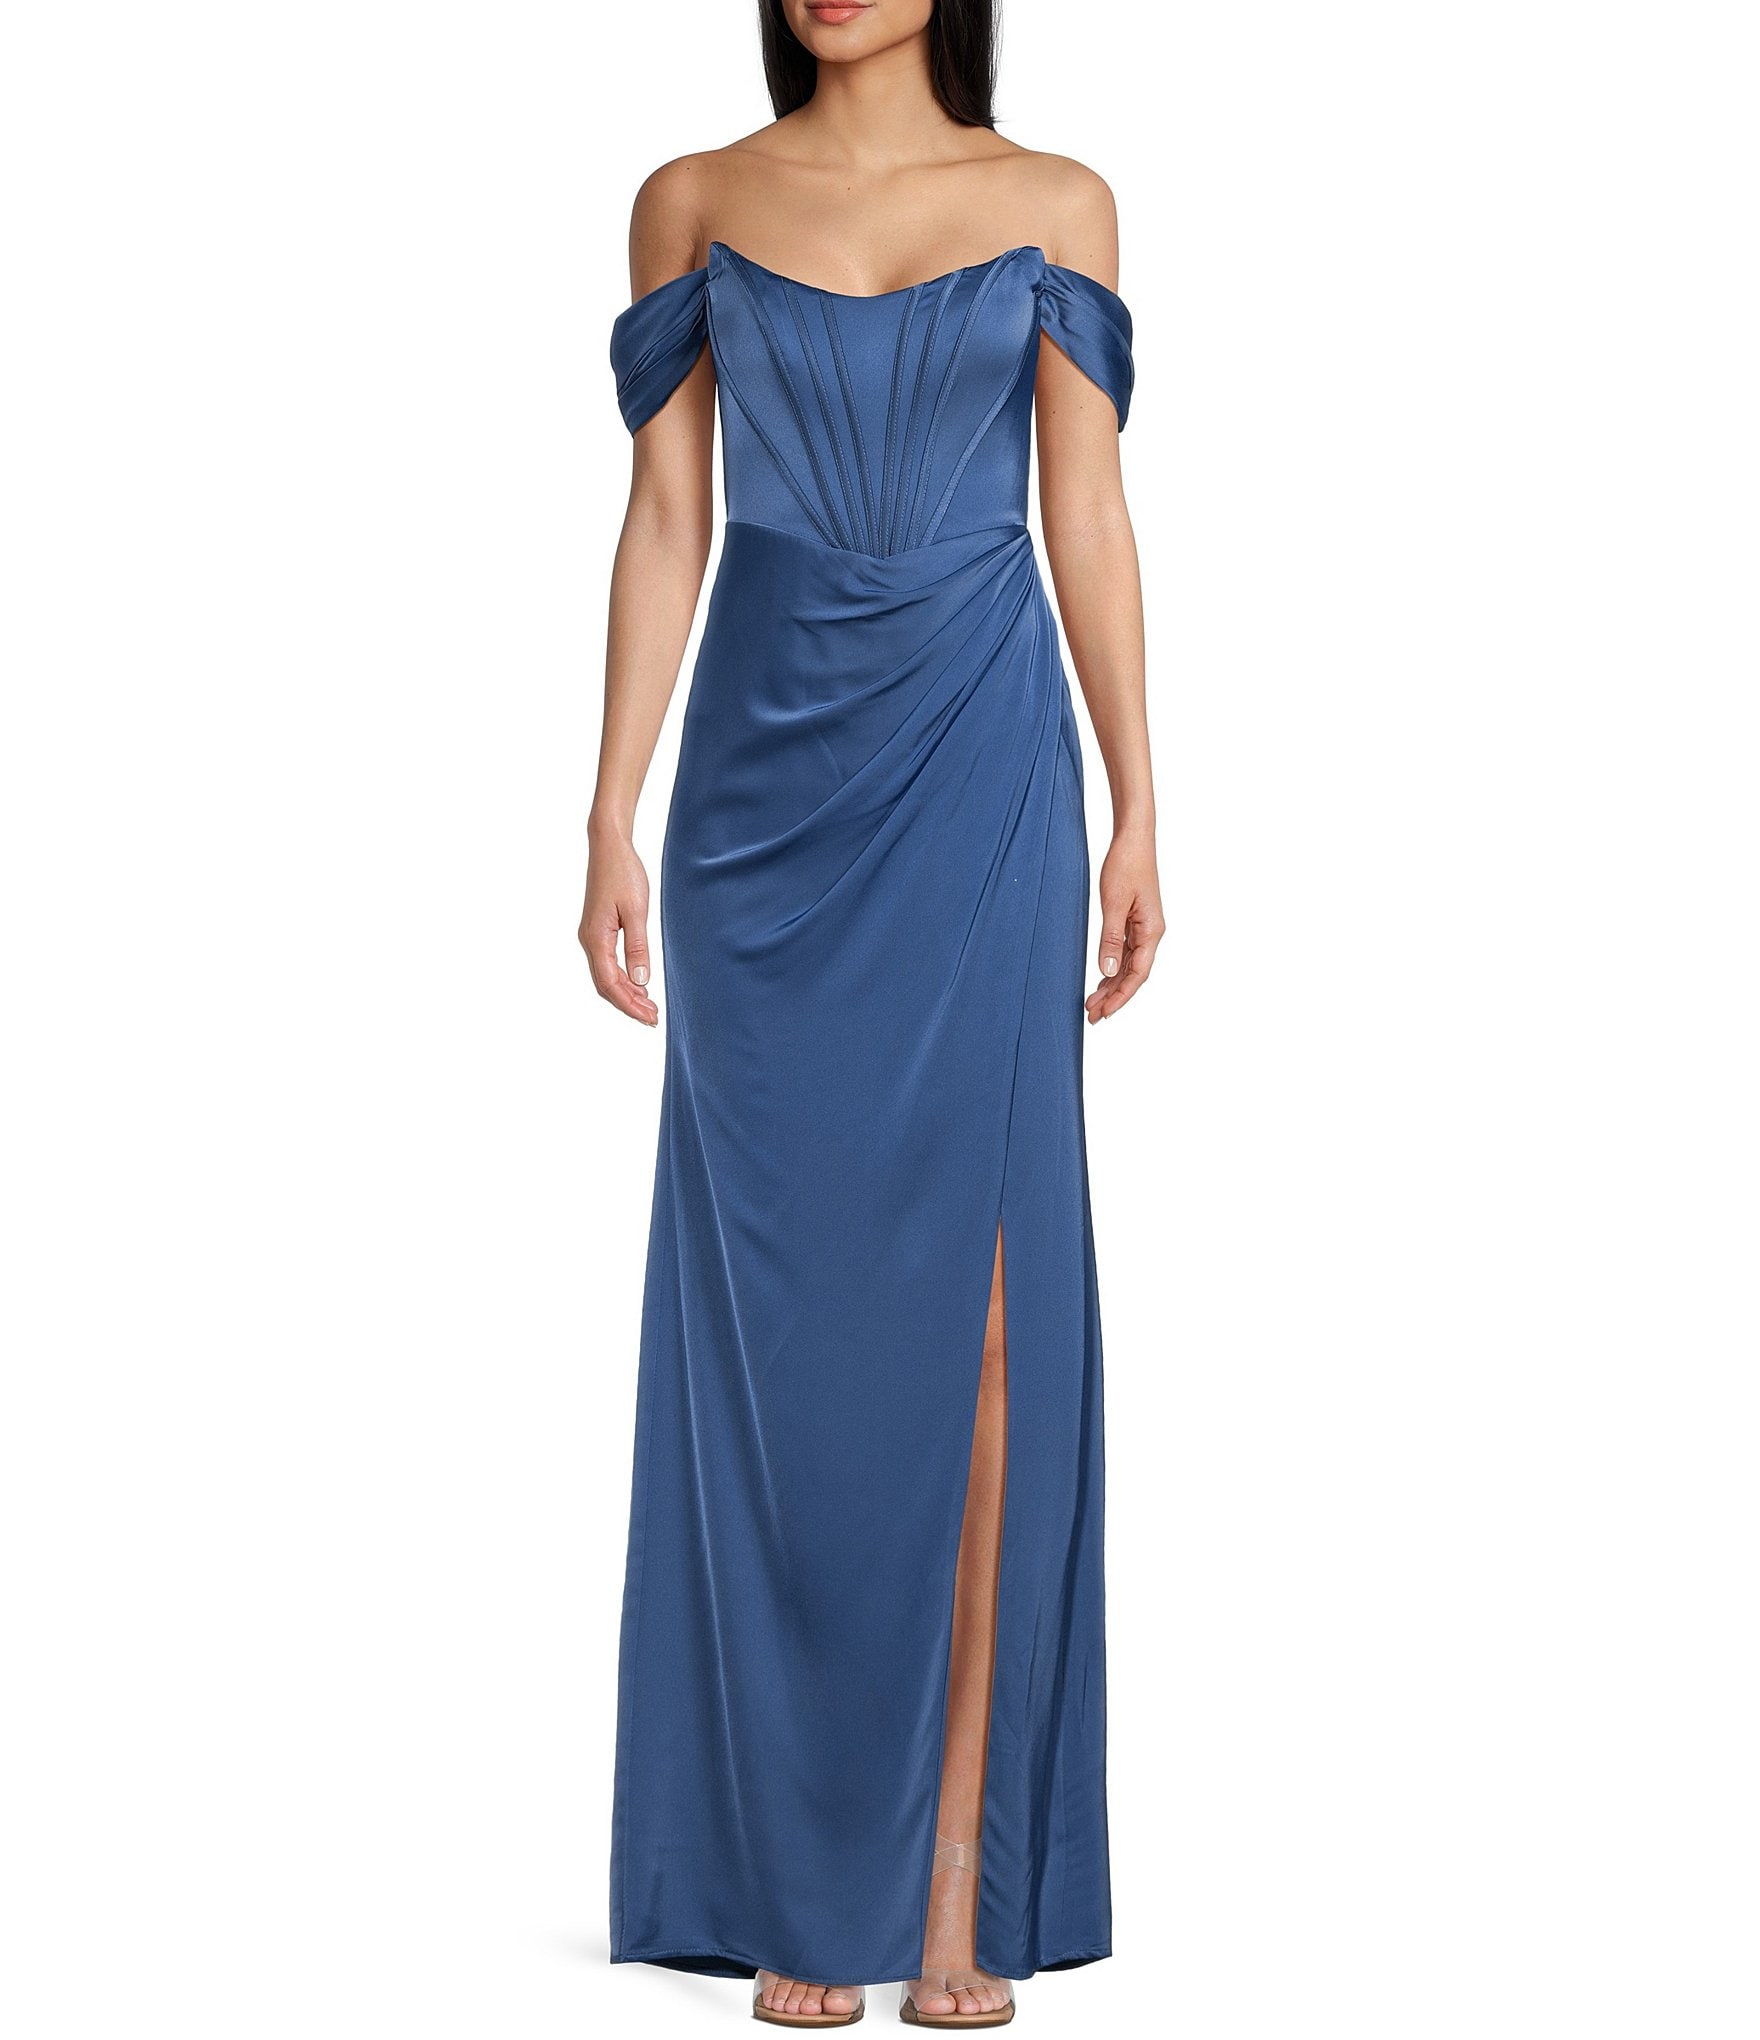 Kila Lace Off Shoulder Corset Dress - Blue